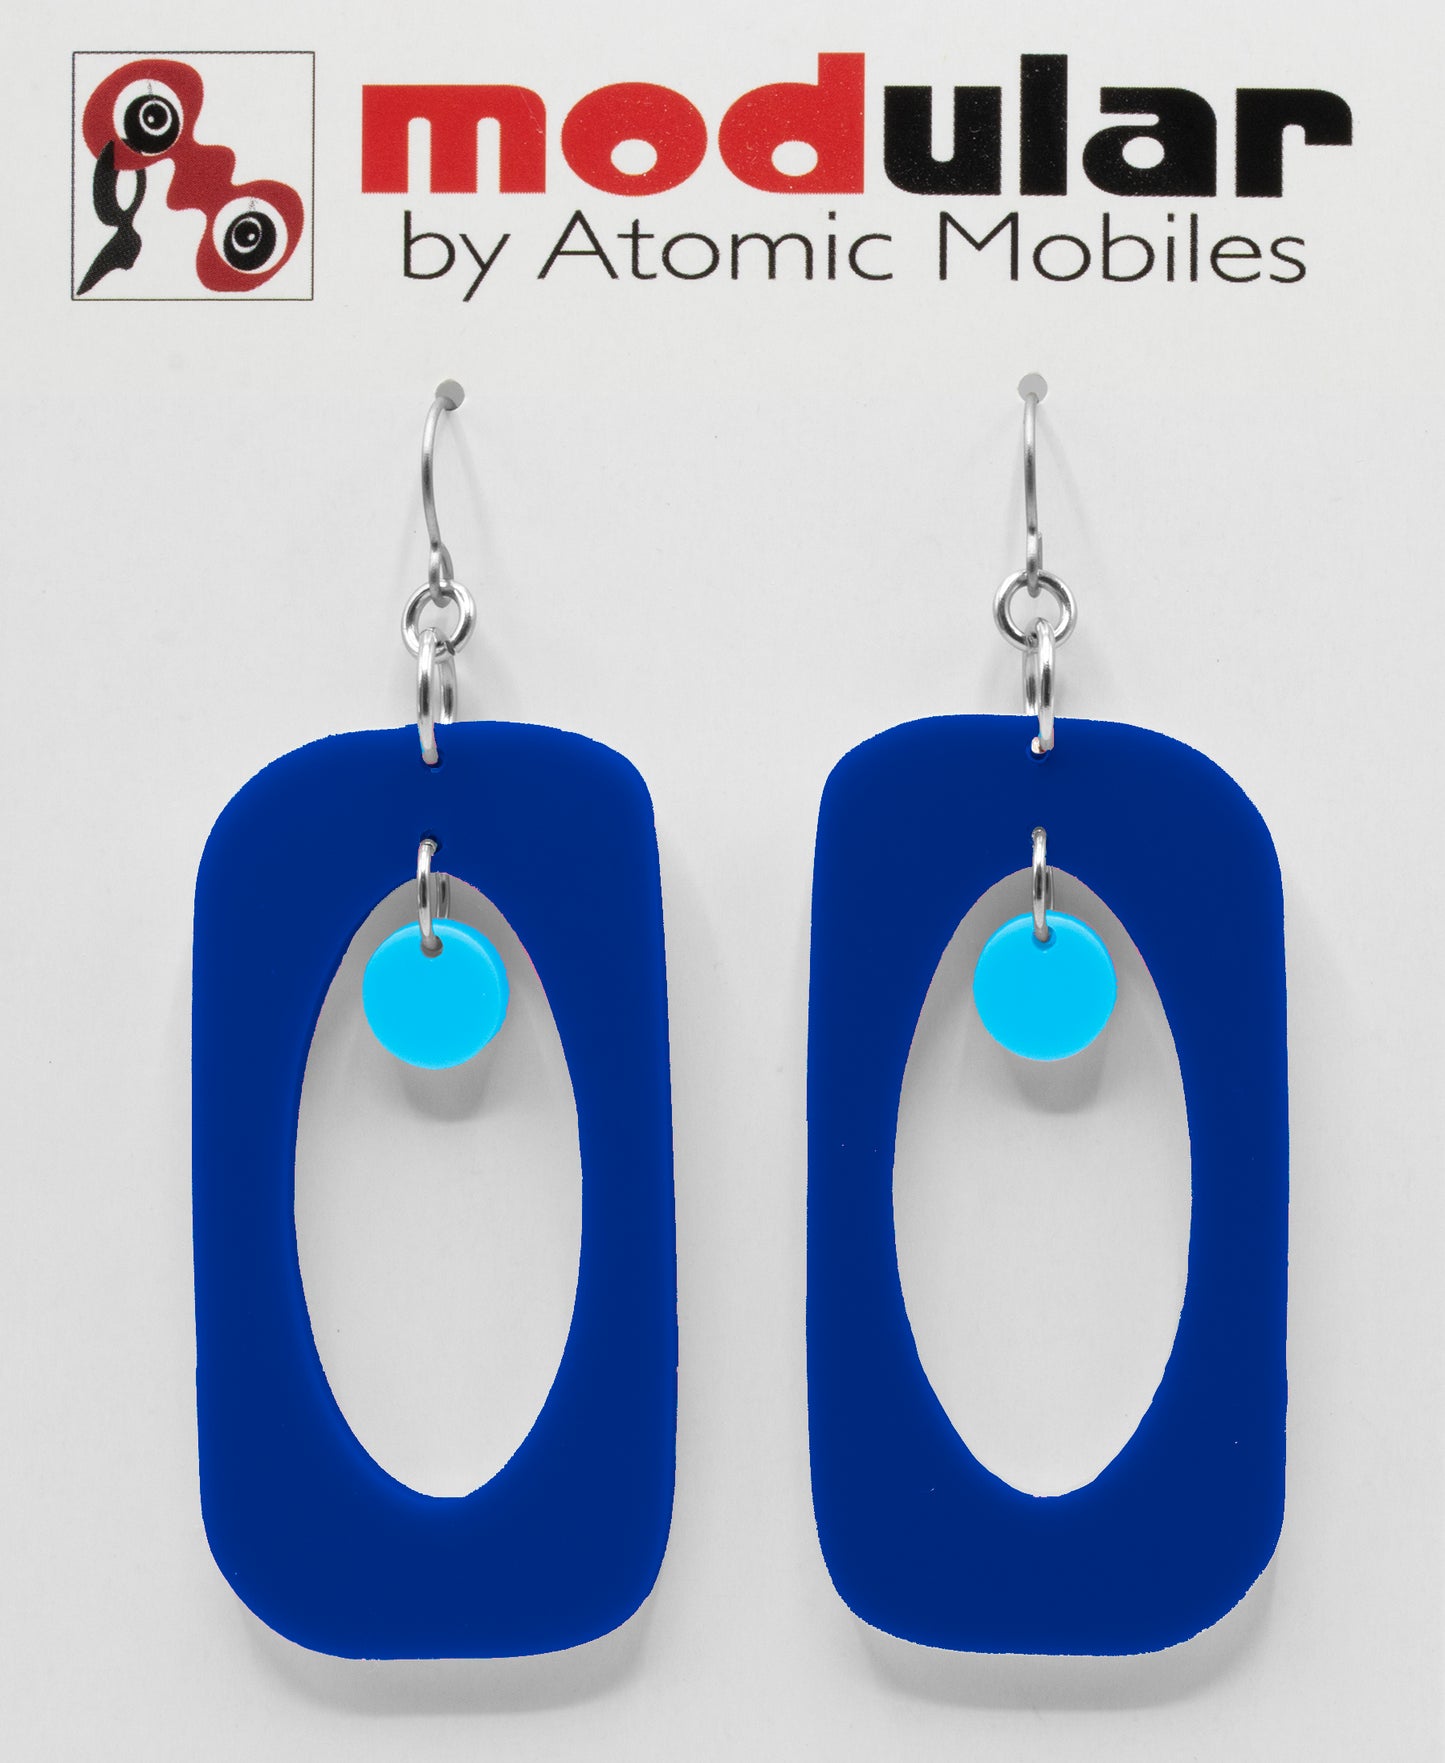 MODular Earrings - Beatnik Boho Statement Earrings in Navy and Blue by AtomicMobiles.com - retro era inspired mod handmade jewelry